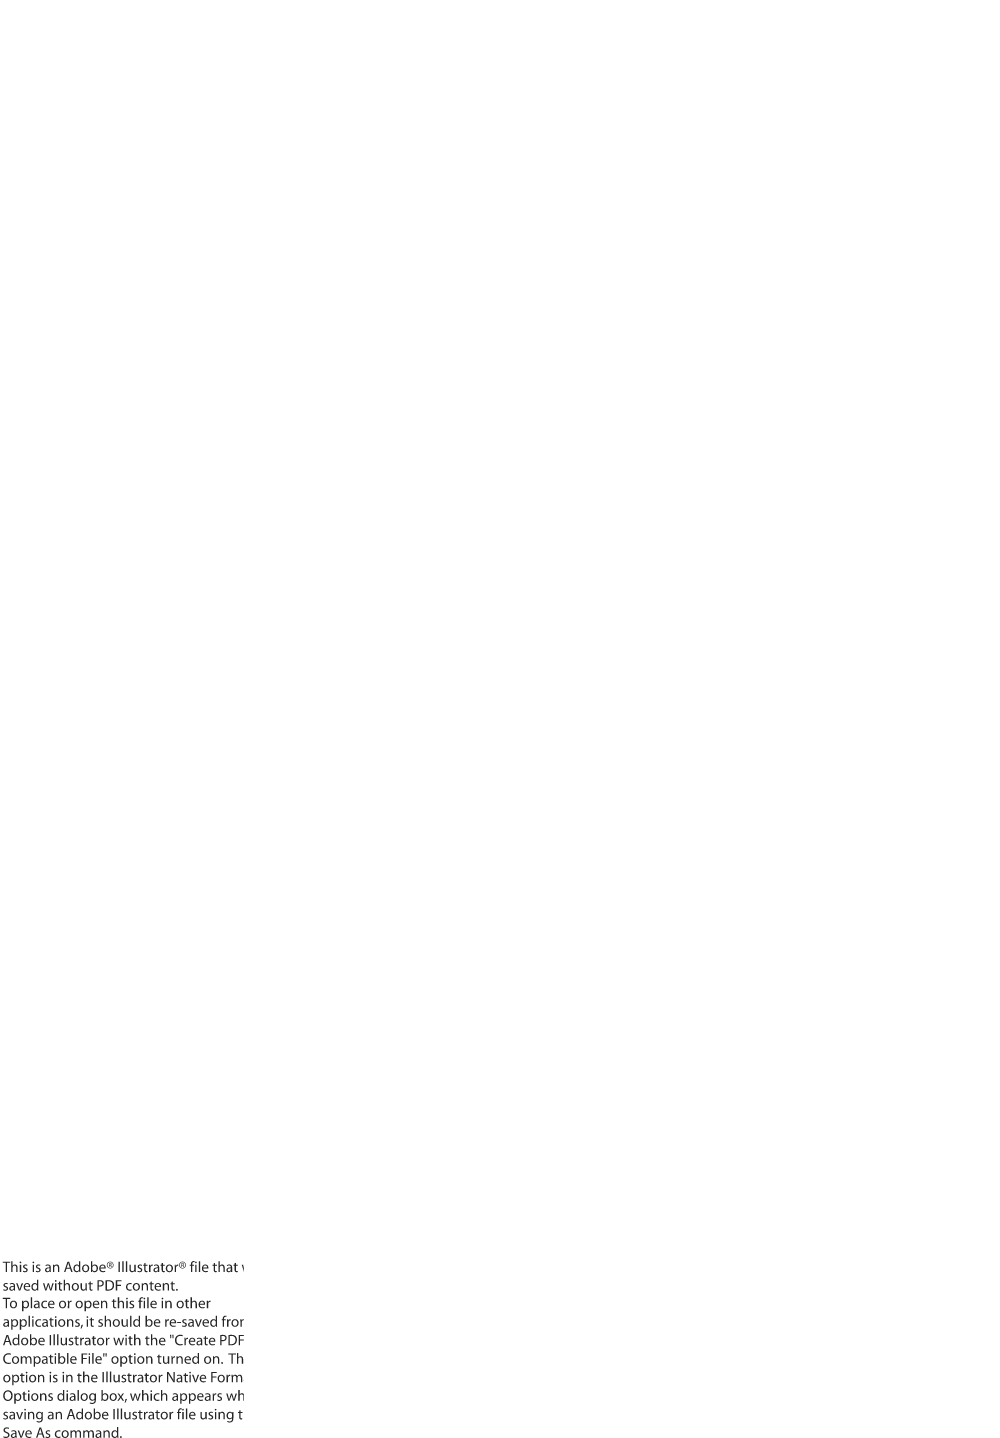 Kronen Zeitung Logo Logos